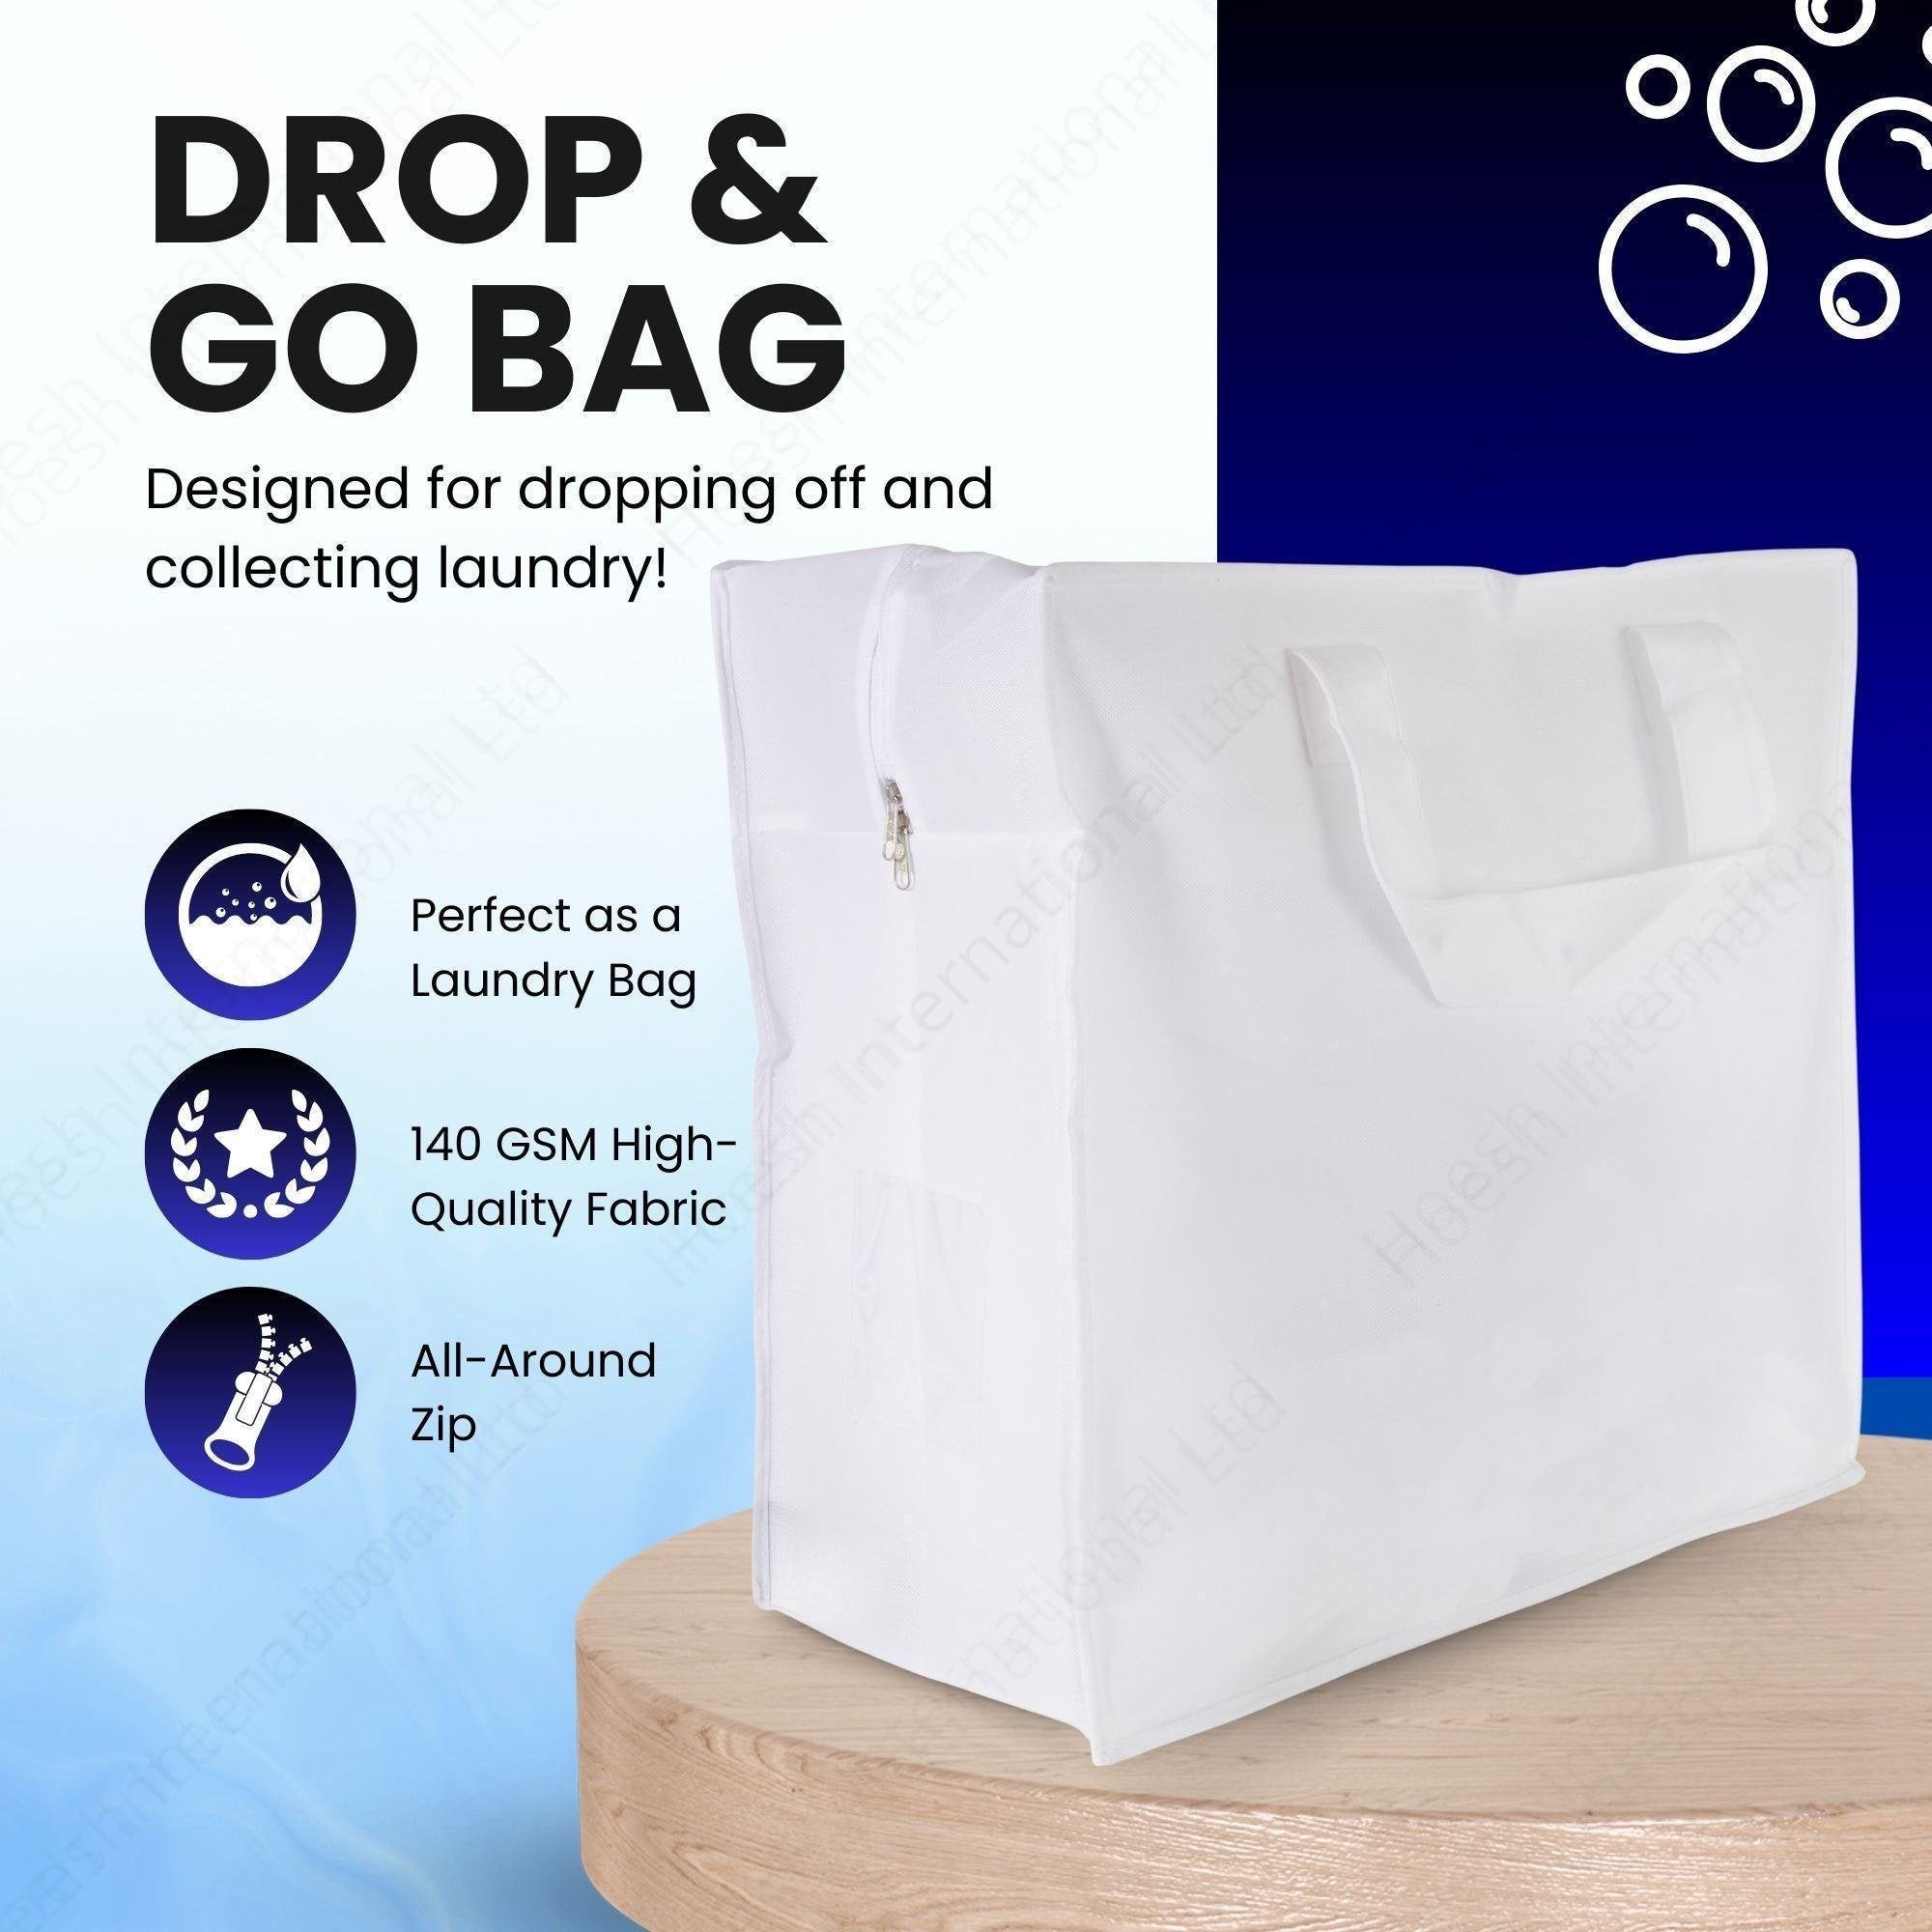 Drop & Go Laundry Bags - Hoesh International Ltd